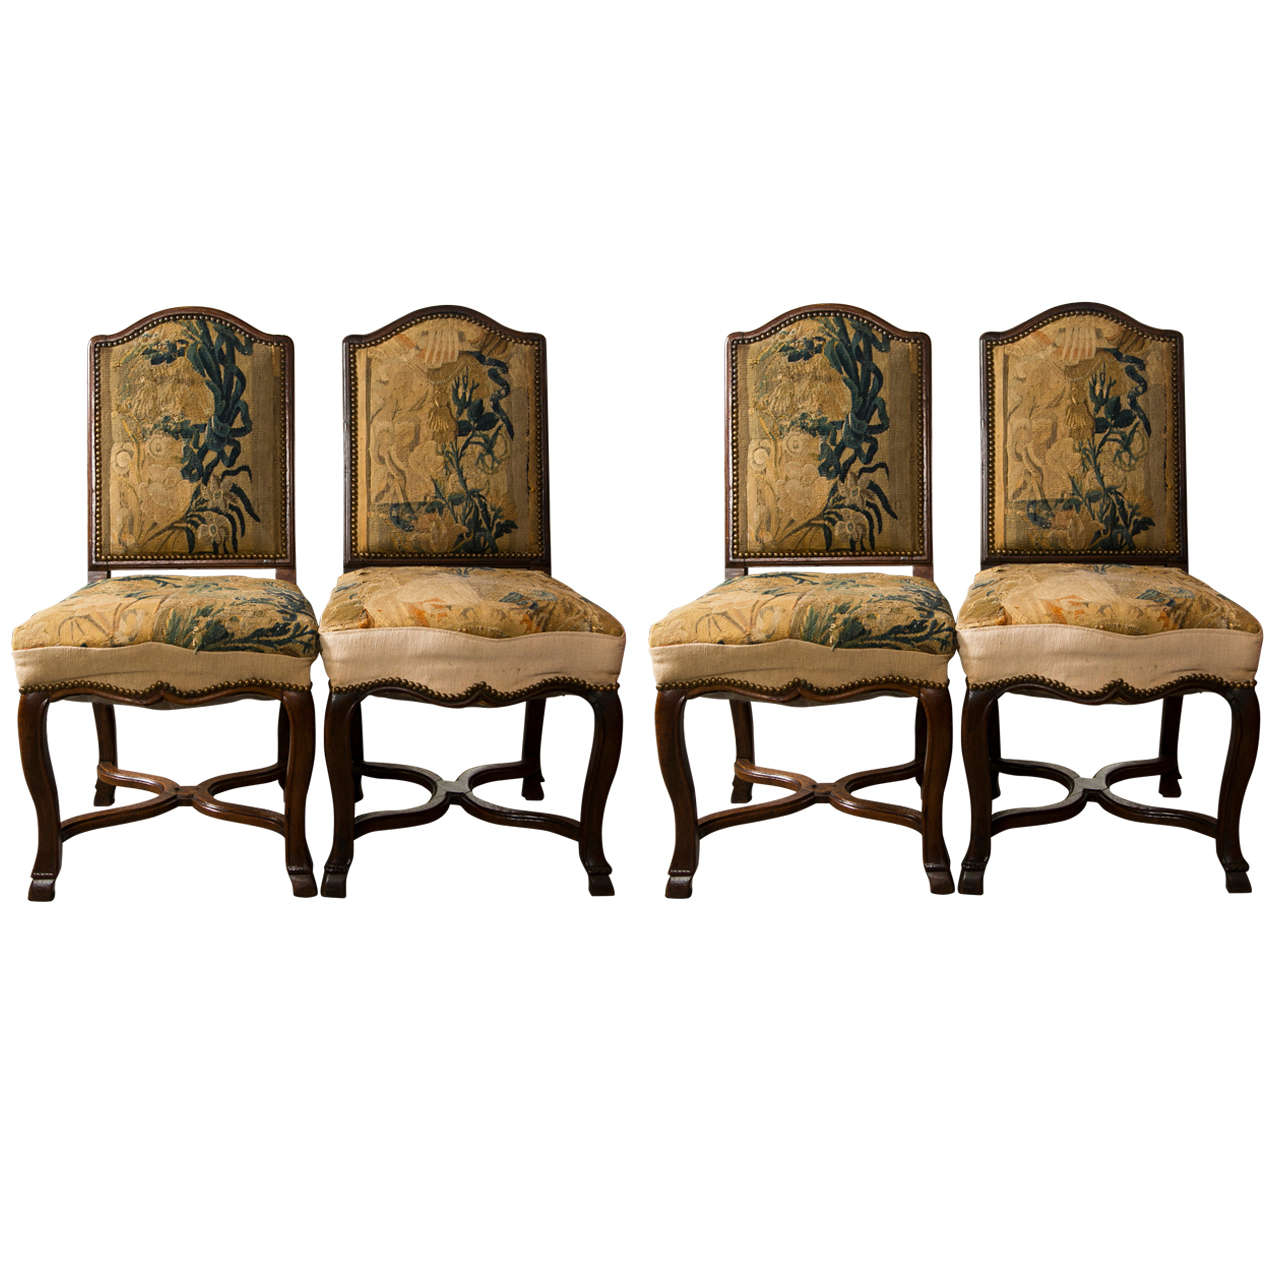 Set of 4 needlepoint french walnut chairs